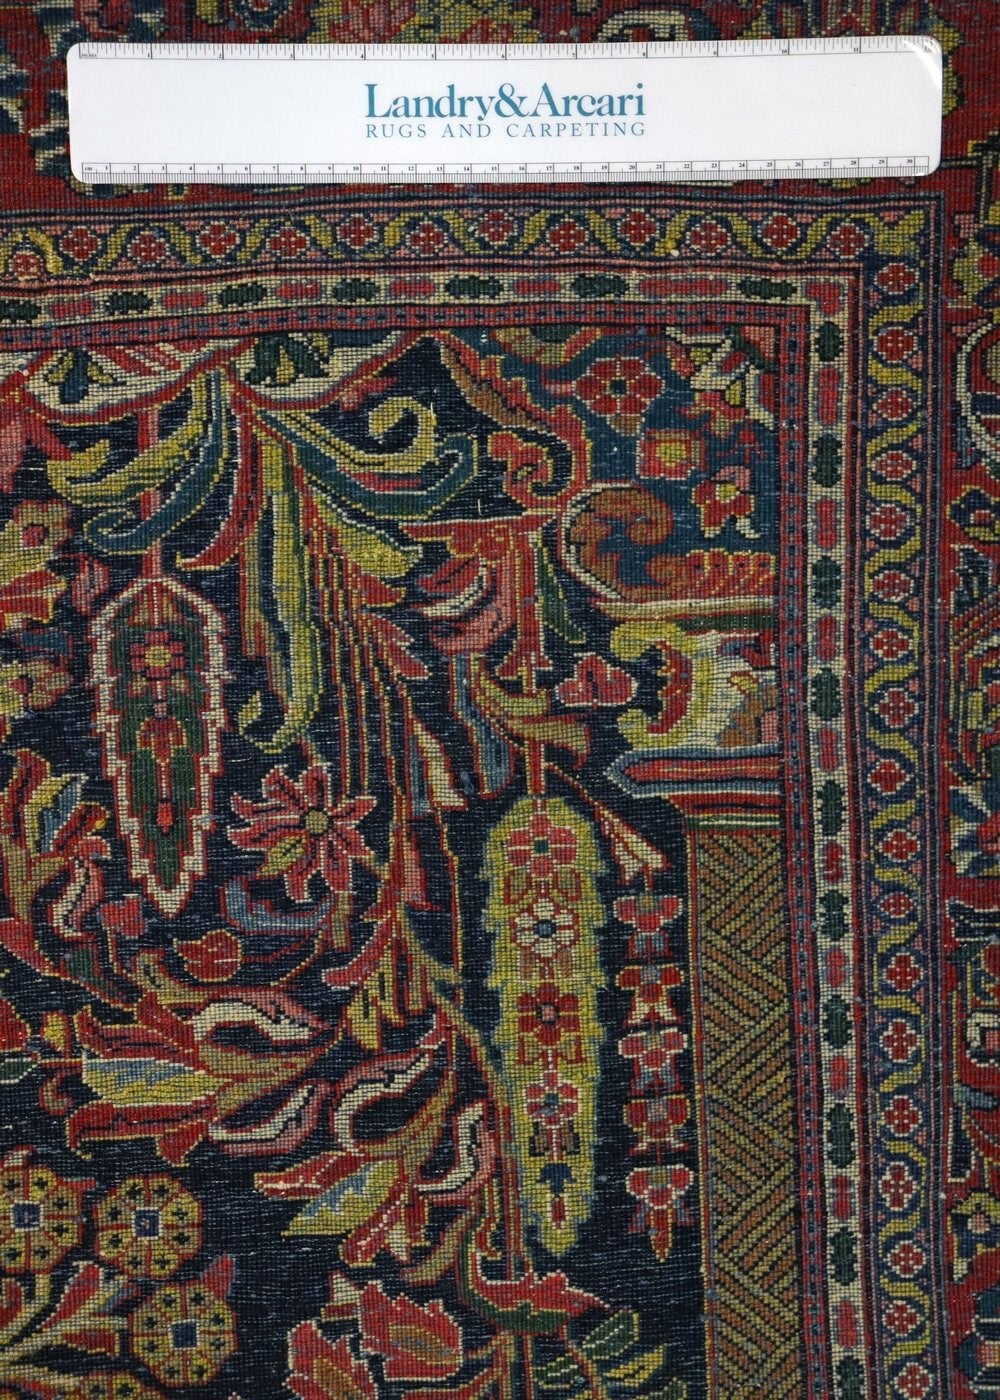 Antique Sarouk PrayerHandwoven Traditional Rug, J67882